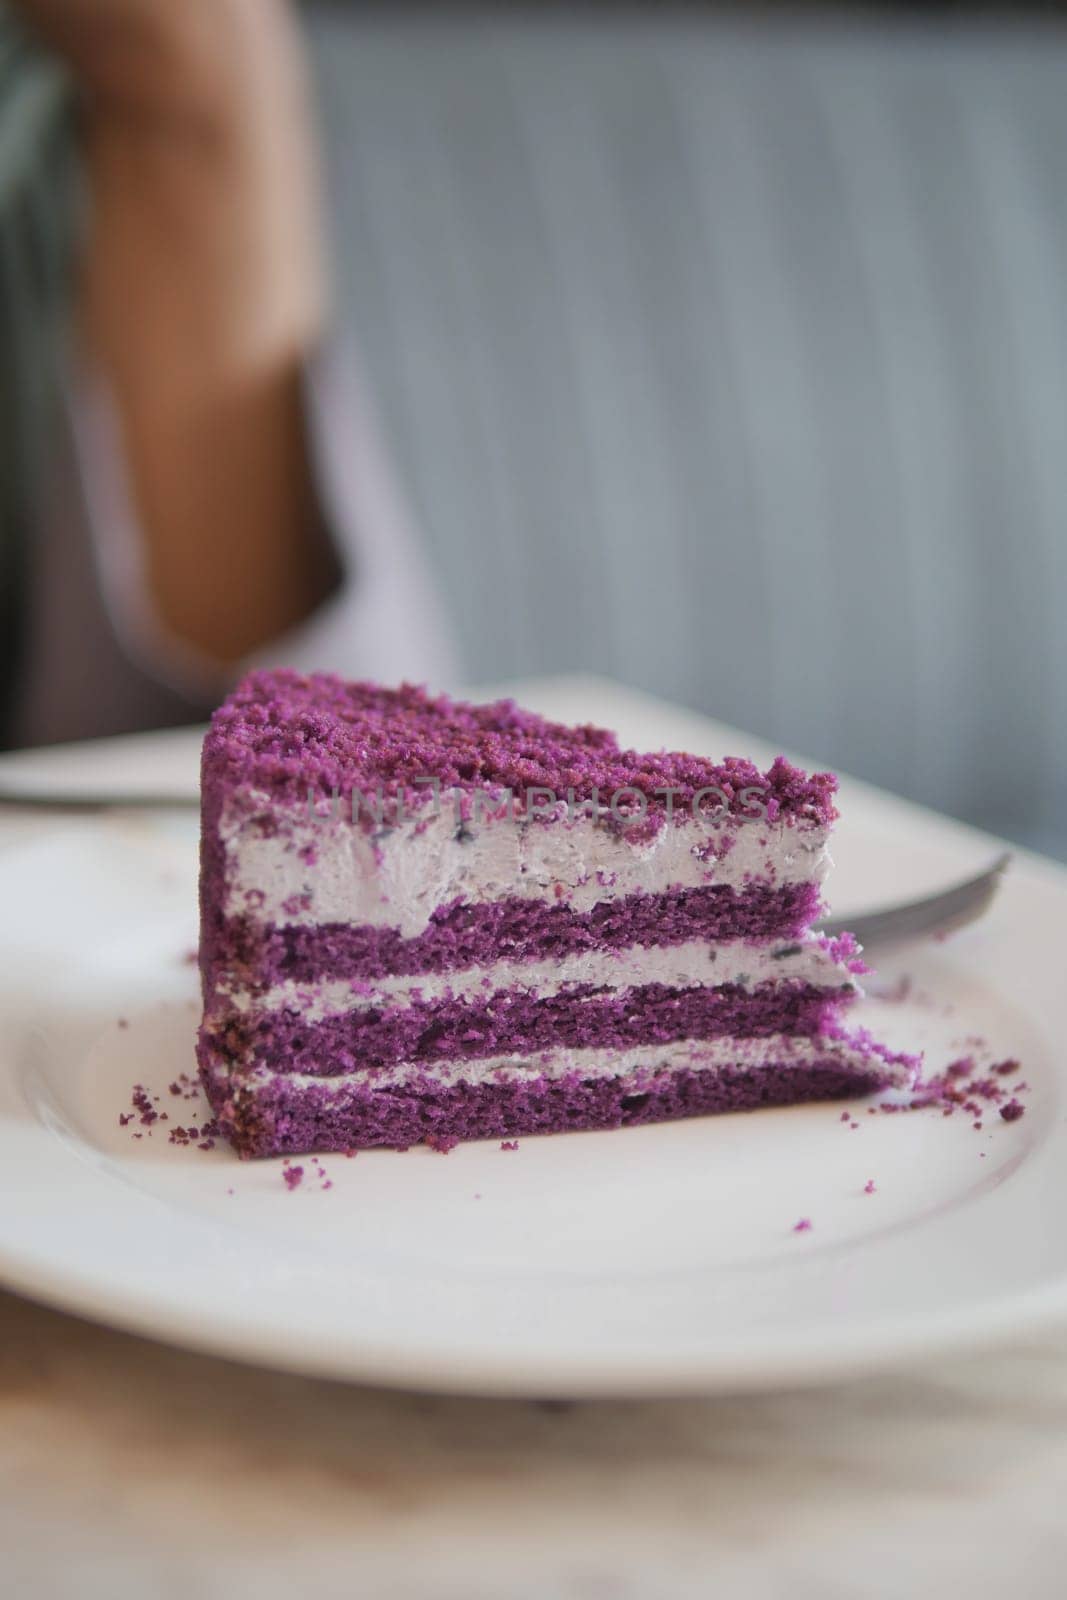 cutting A piece of purple velvet cake with cream .